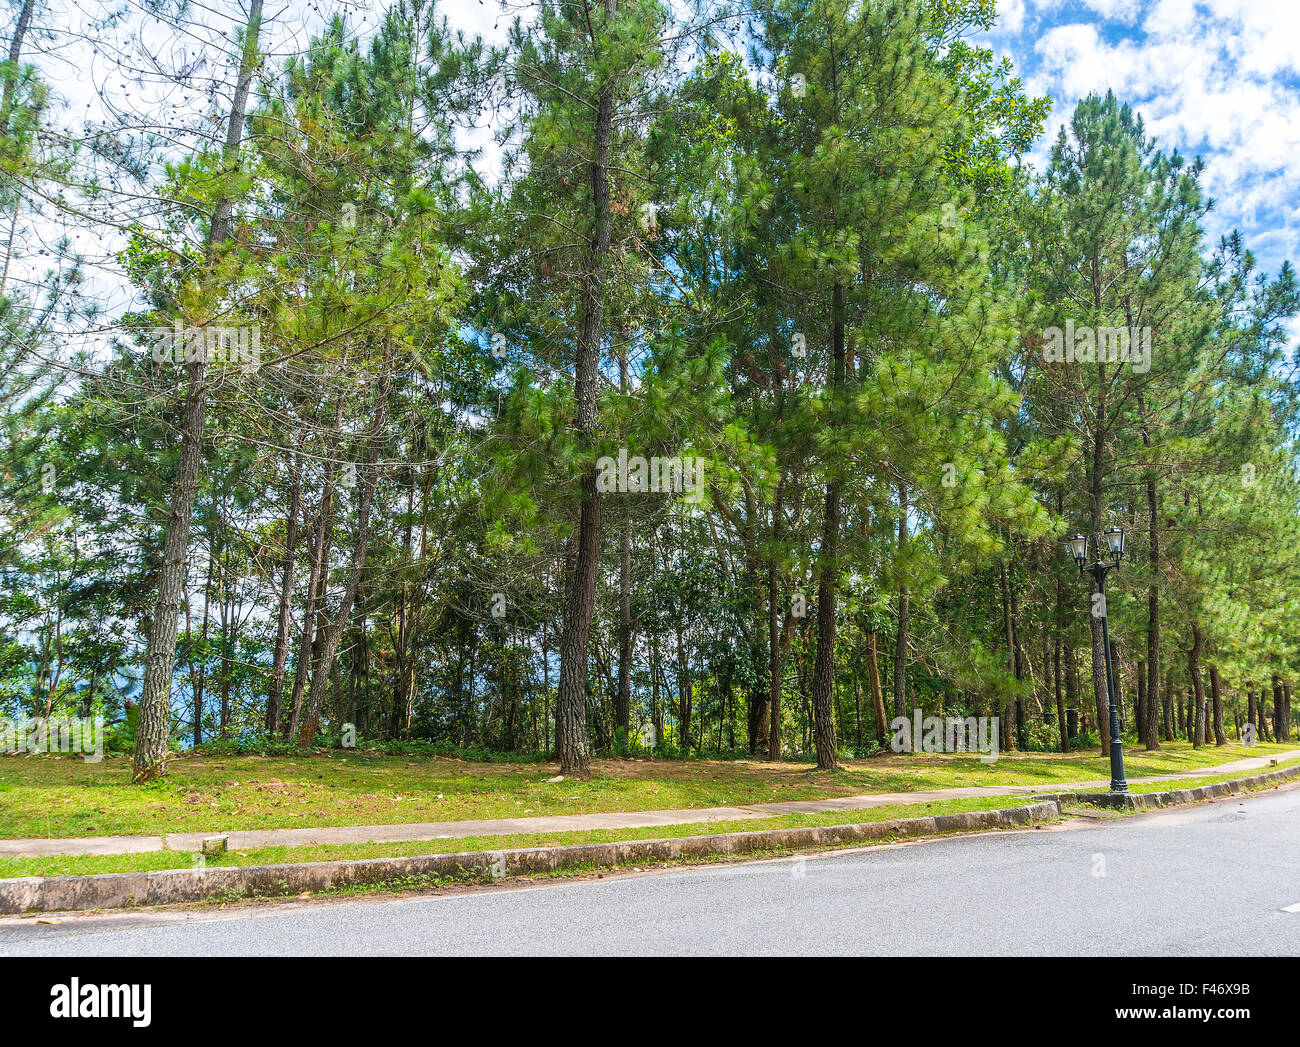 Pine casuarina tree and asphalt road with blue skies Stock Photo